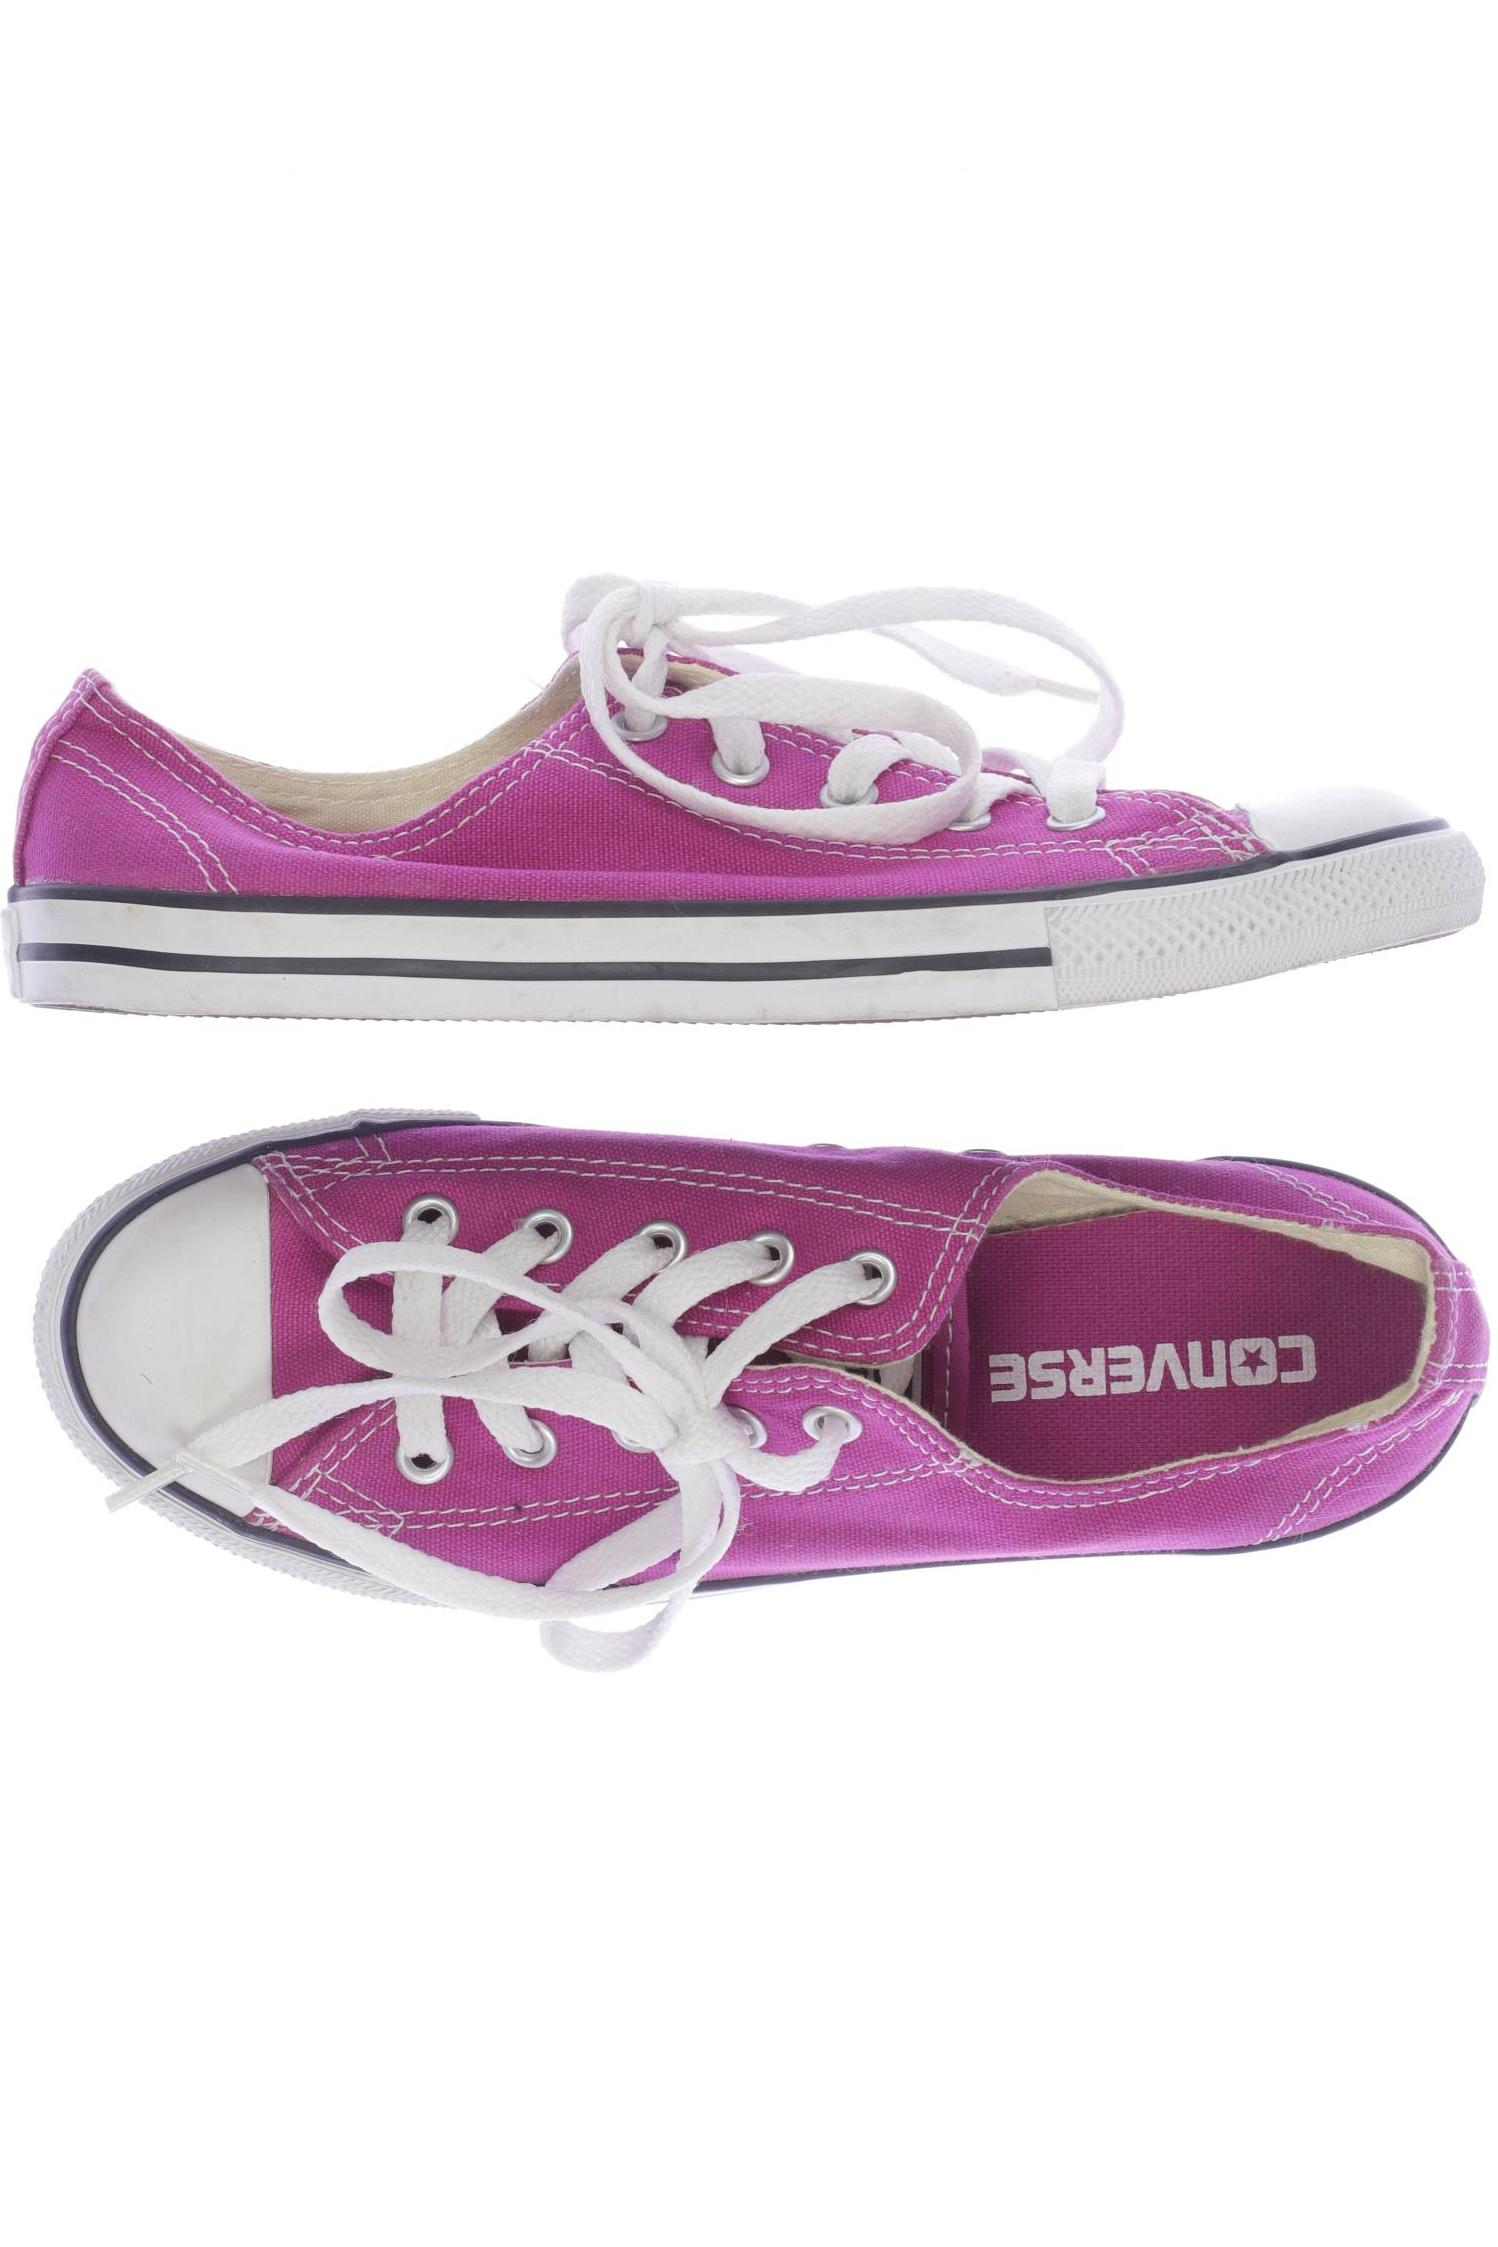 Converse Damen Sneakers, pink von Converse